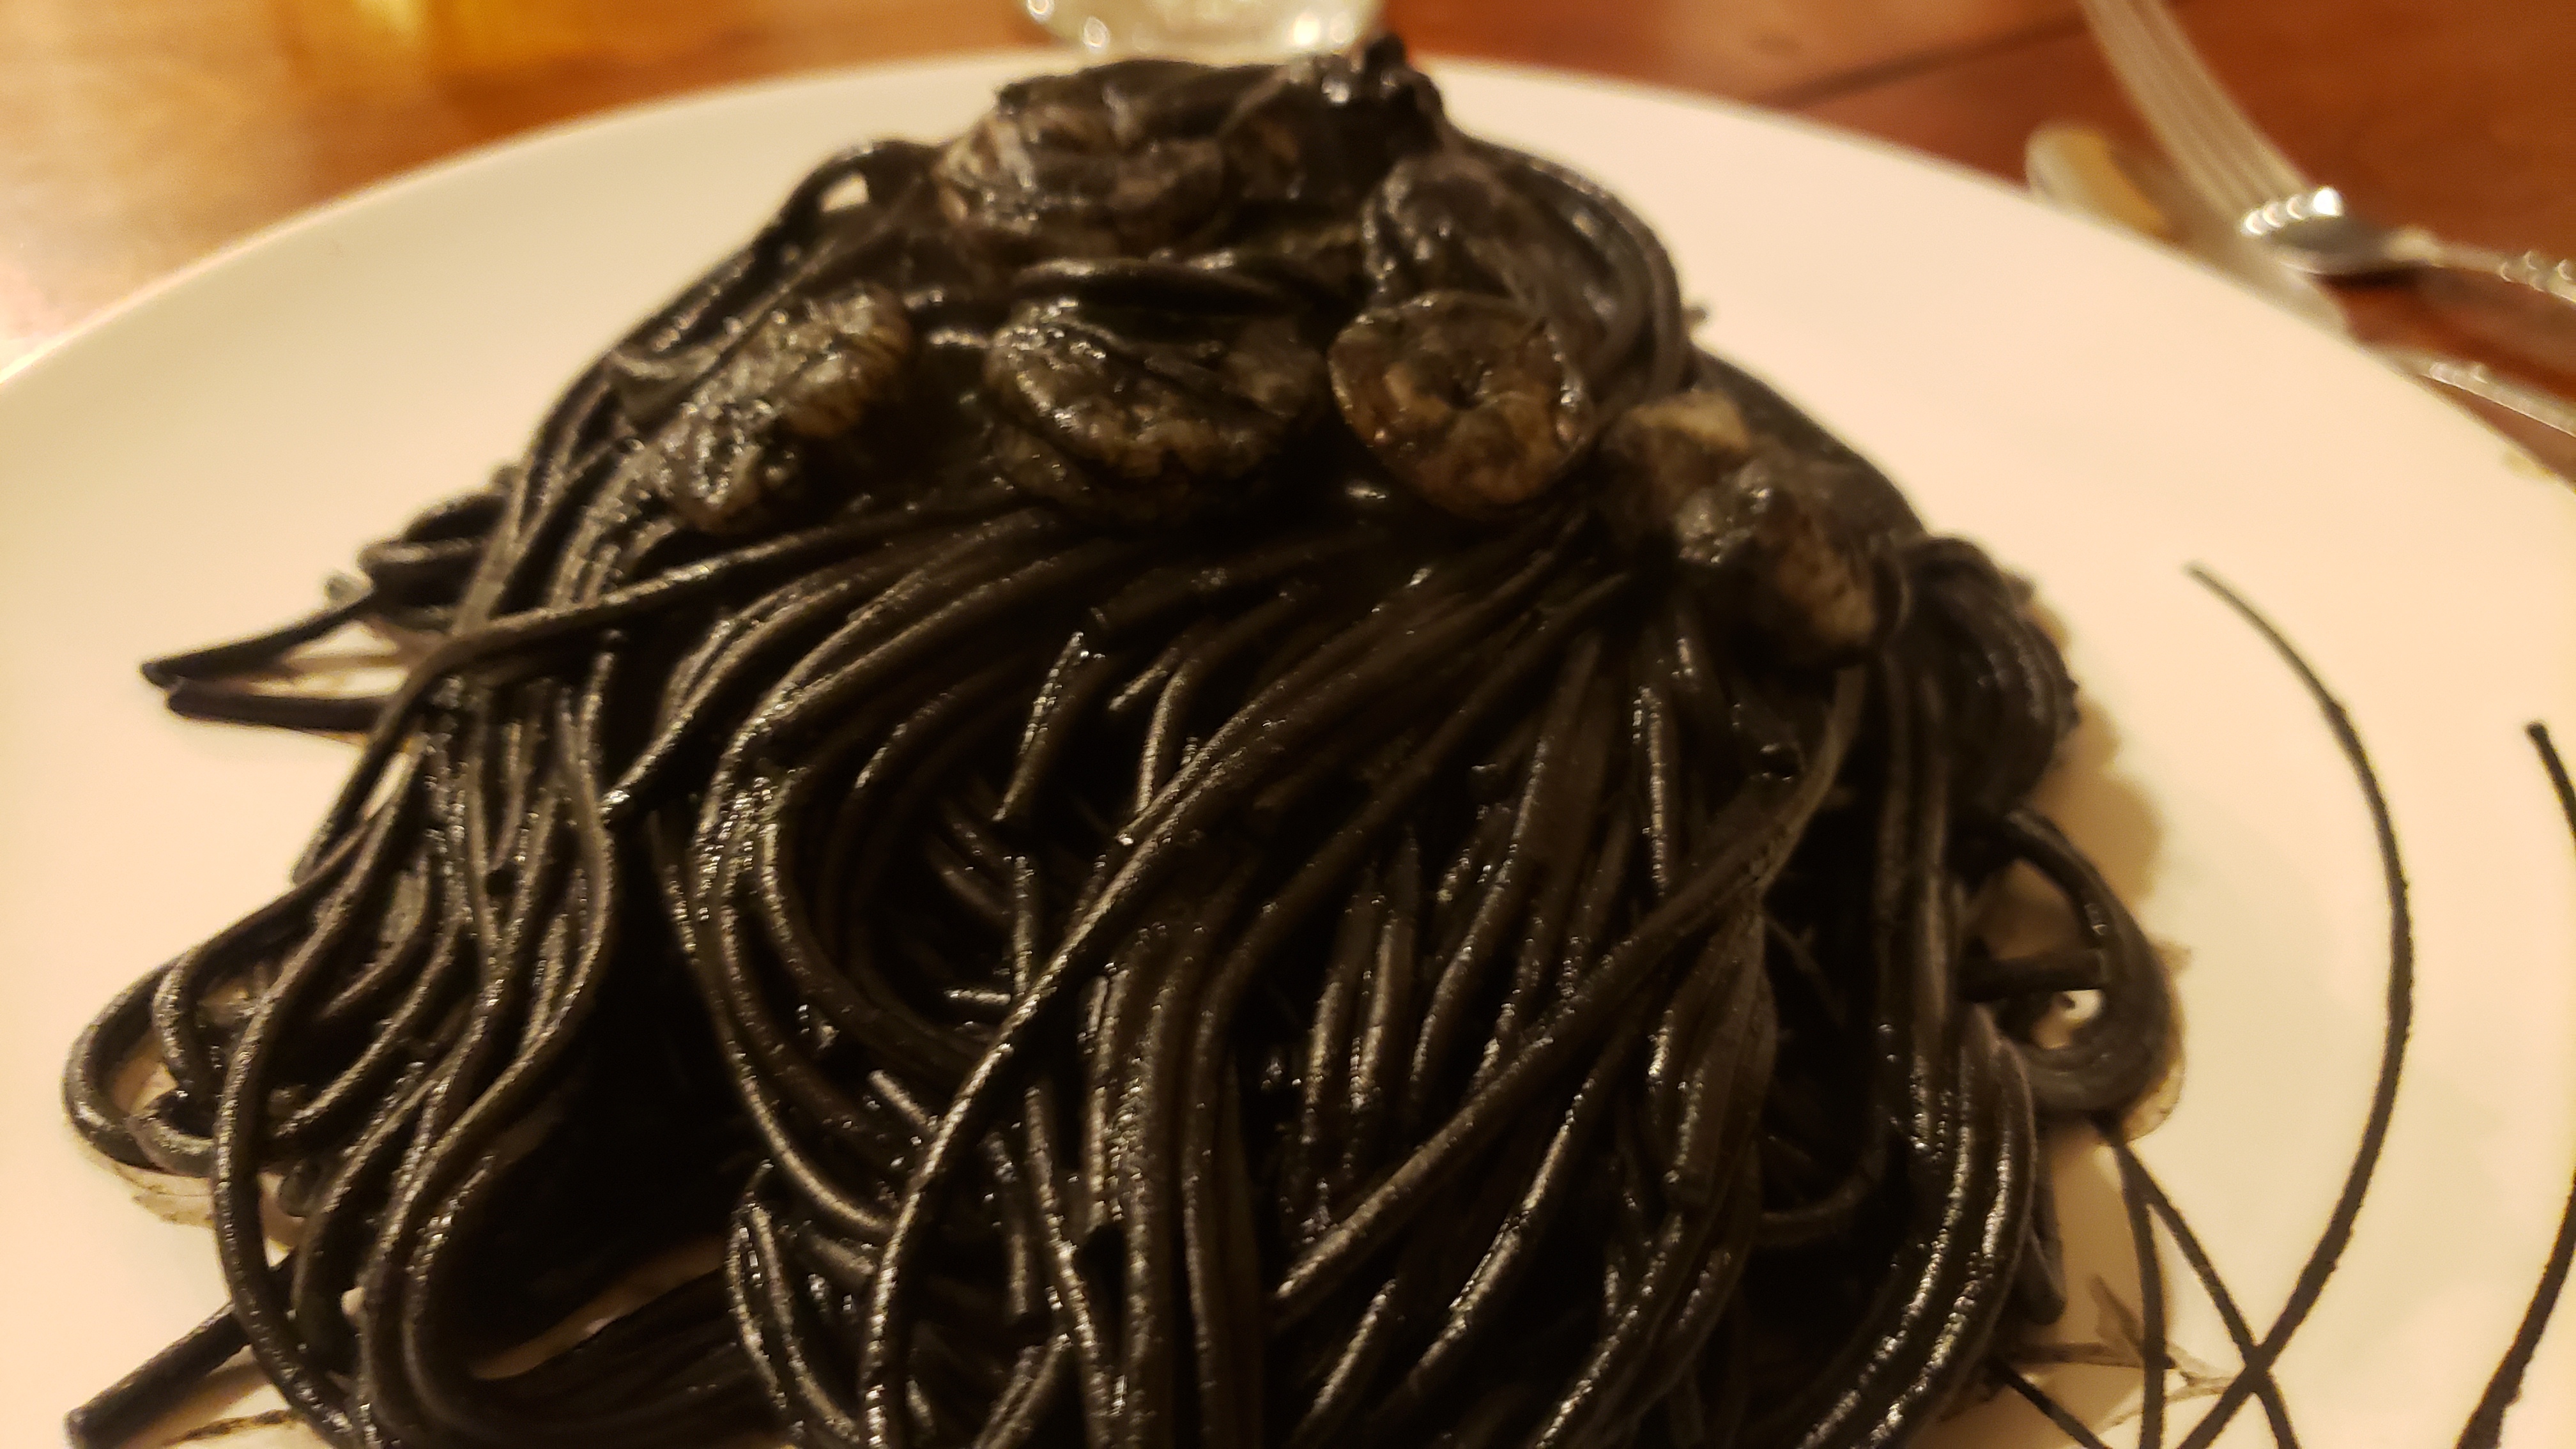 Jo Jo's squid ink pasta